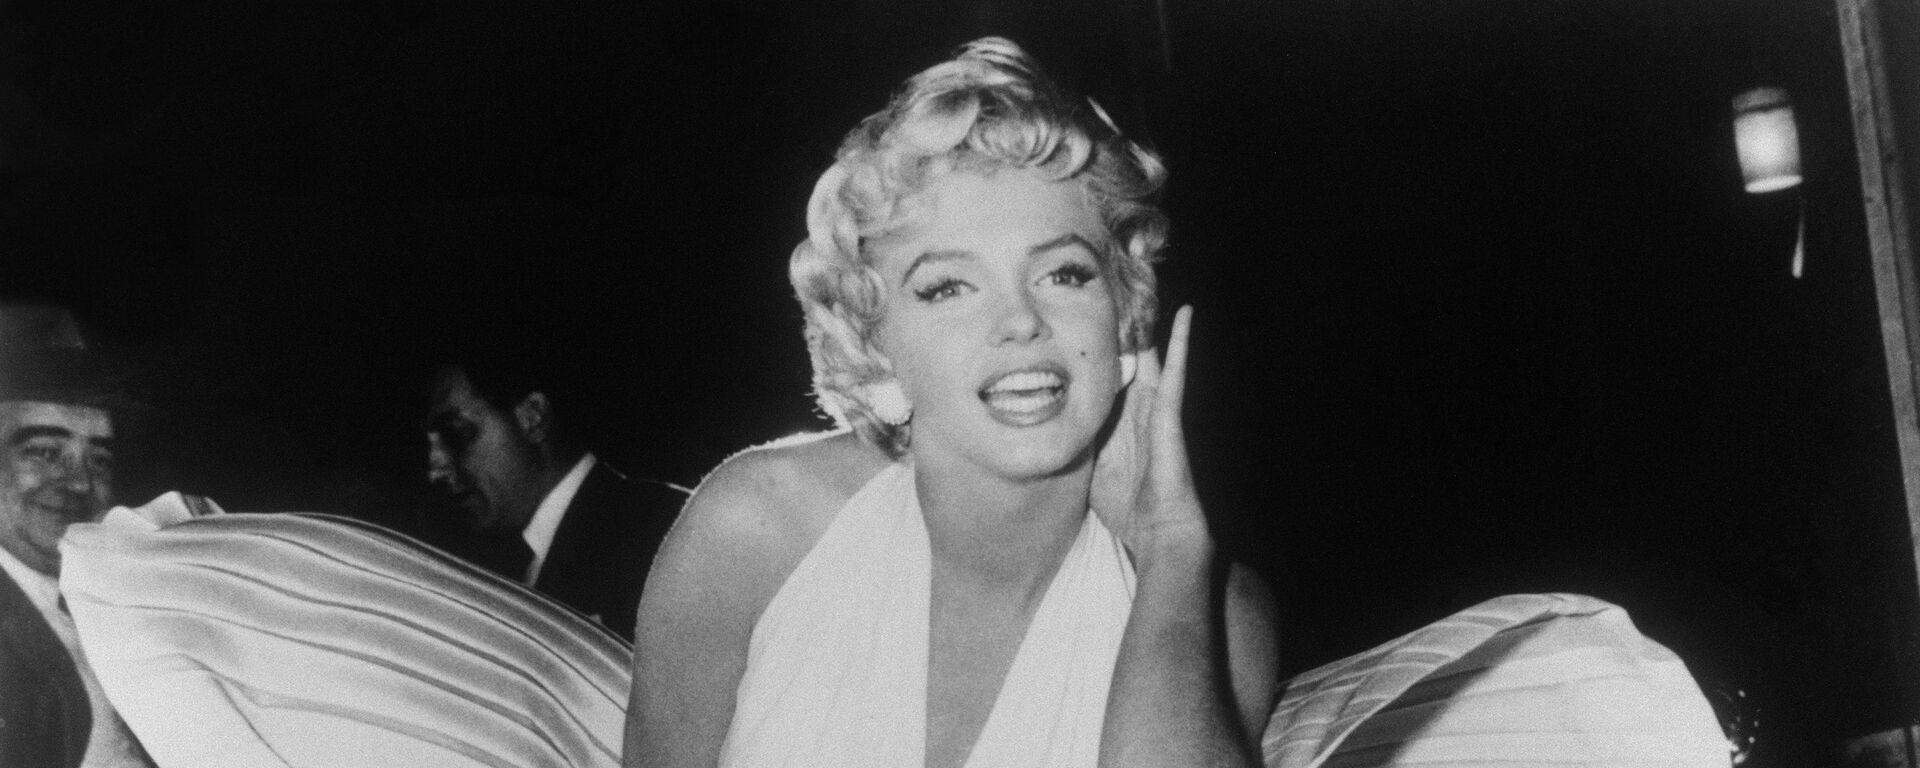 Marilyn Monroe, actriz estadounidense - Sputnik Mundo, 1920, 10.12.2020